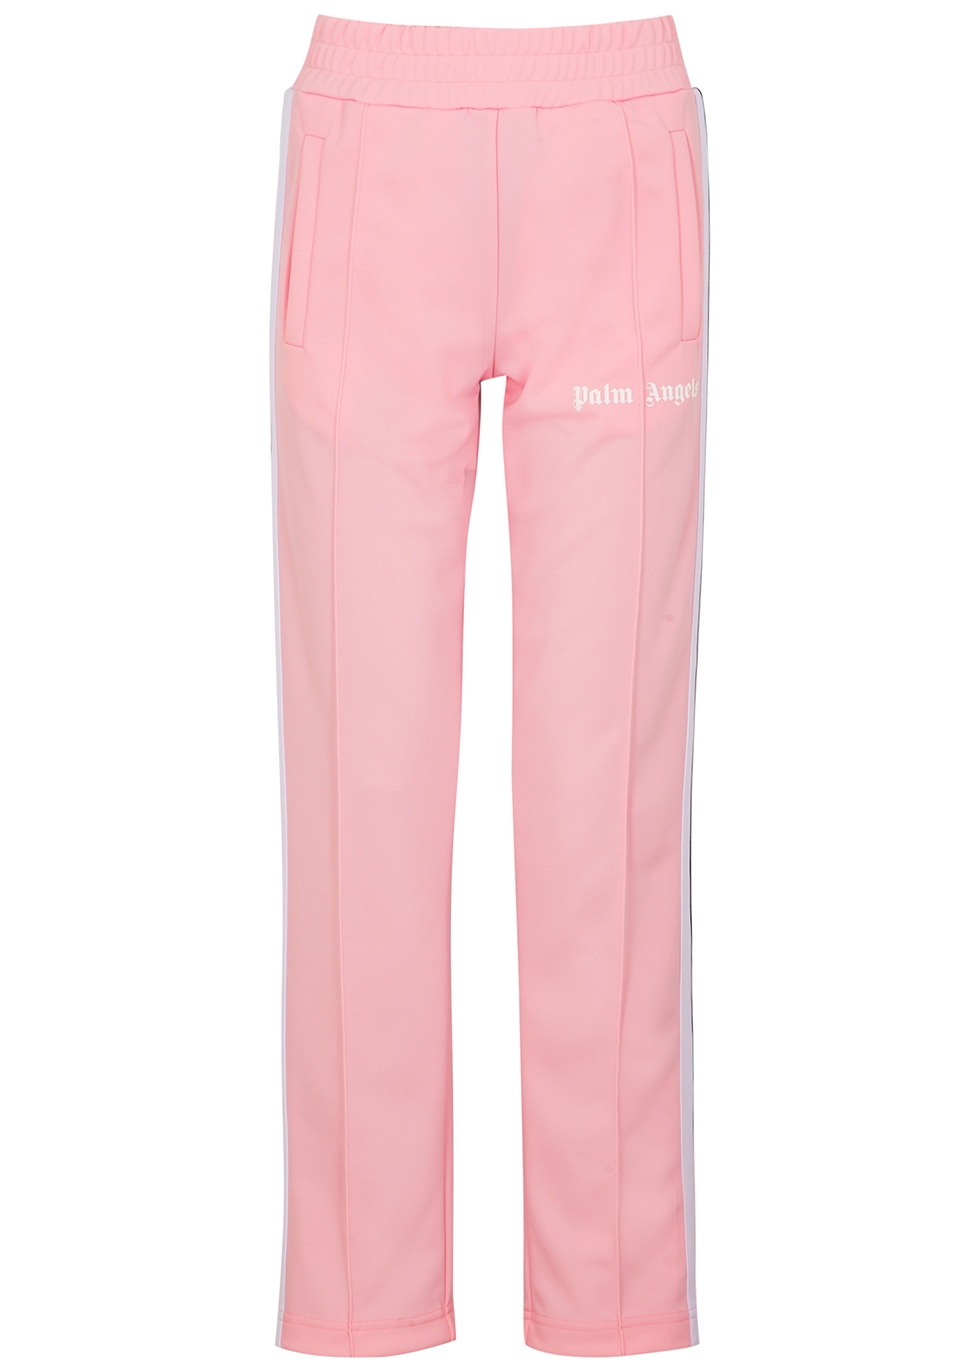 Buy Girls Pink Print Regular Fit Track Pants Online  679821  Allen Solly